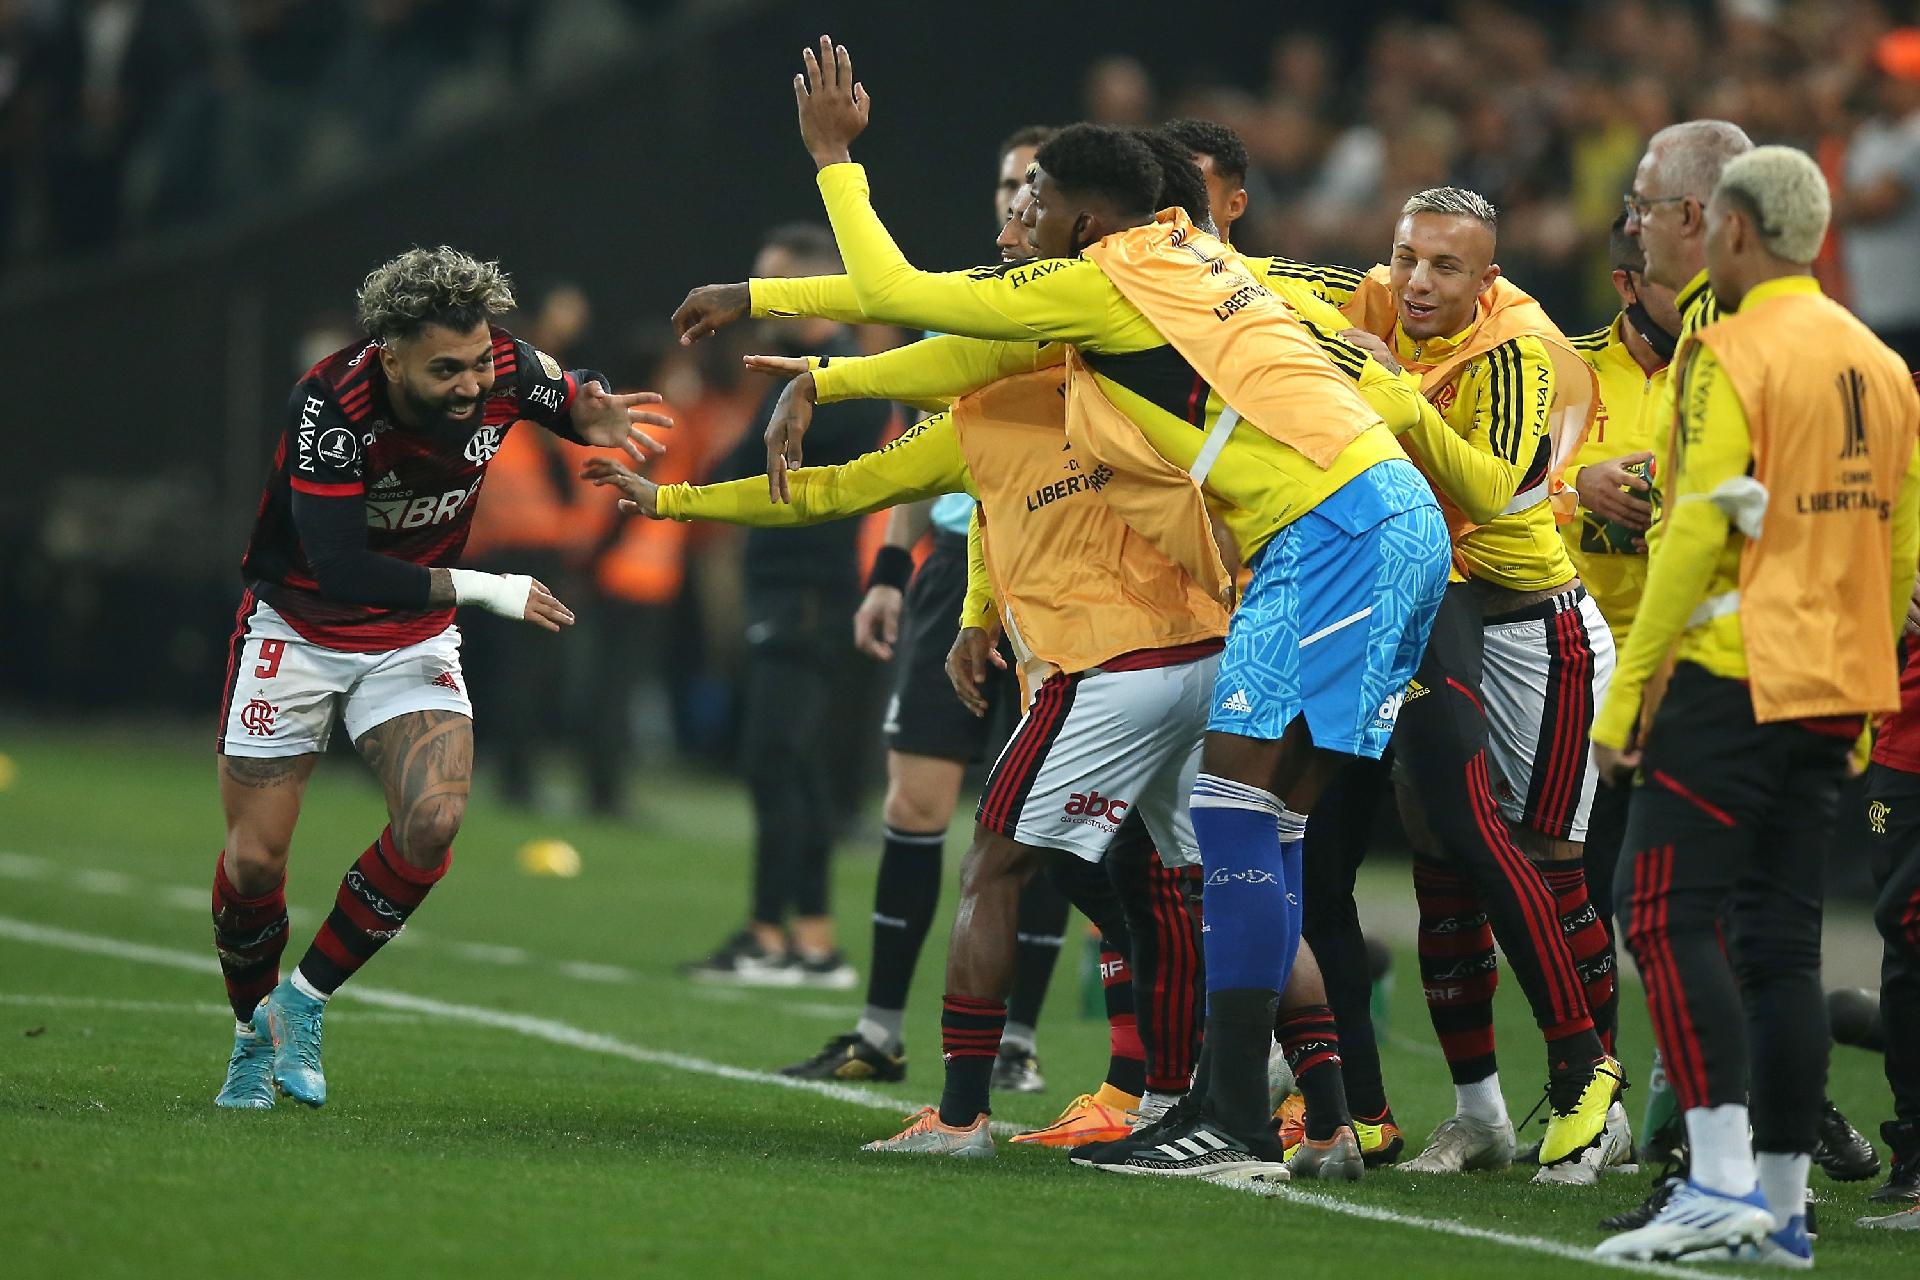 Torcedores de Flamengo e Corinthians se unem pelo mesmo objetivo na final  da Libertadores - Esportes - R7 Lance